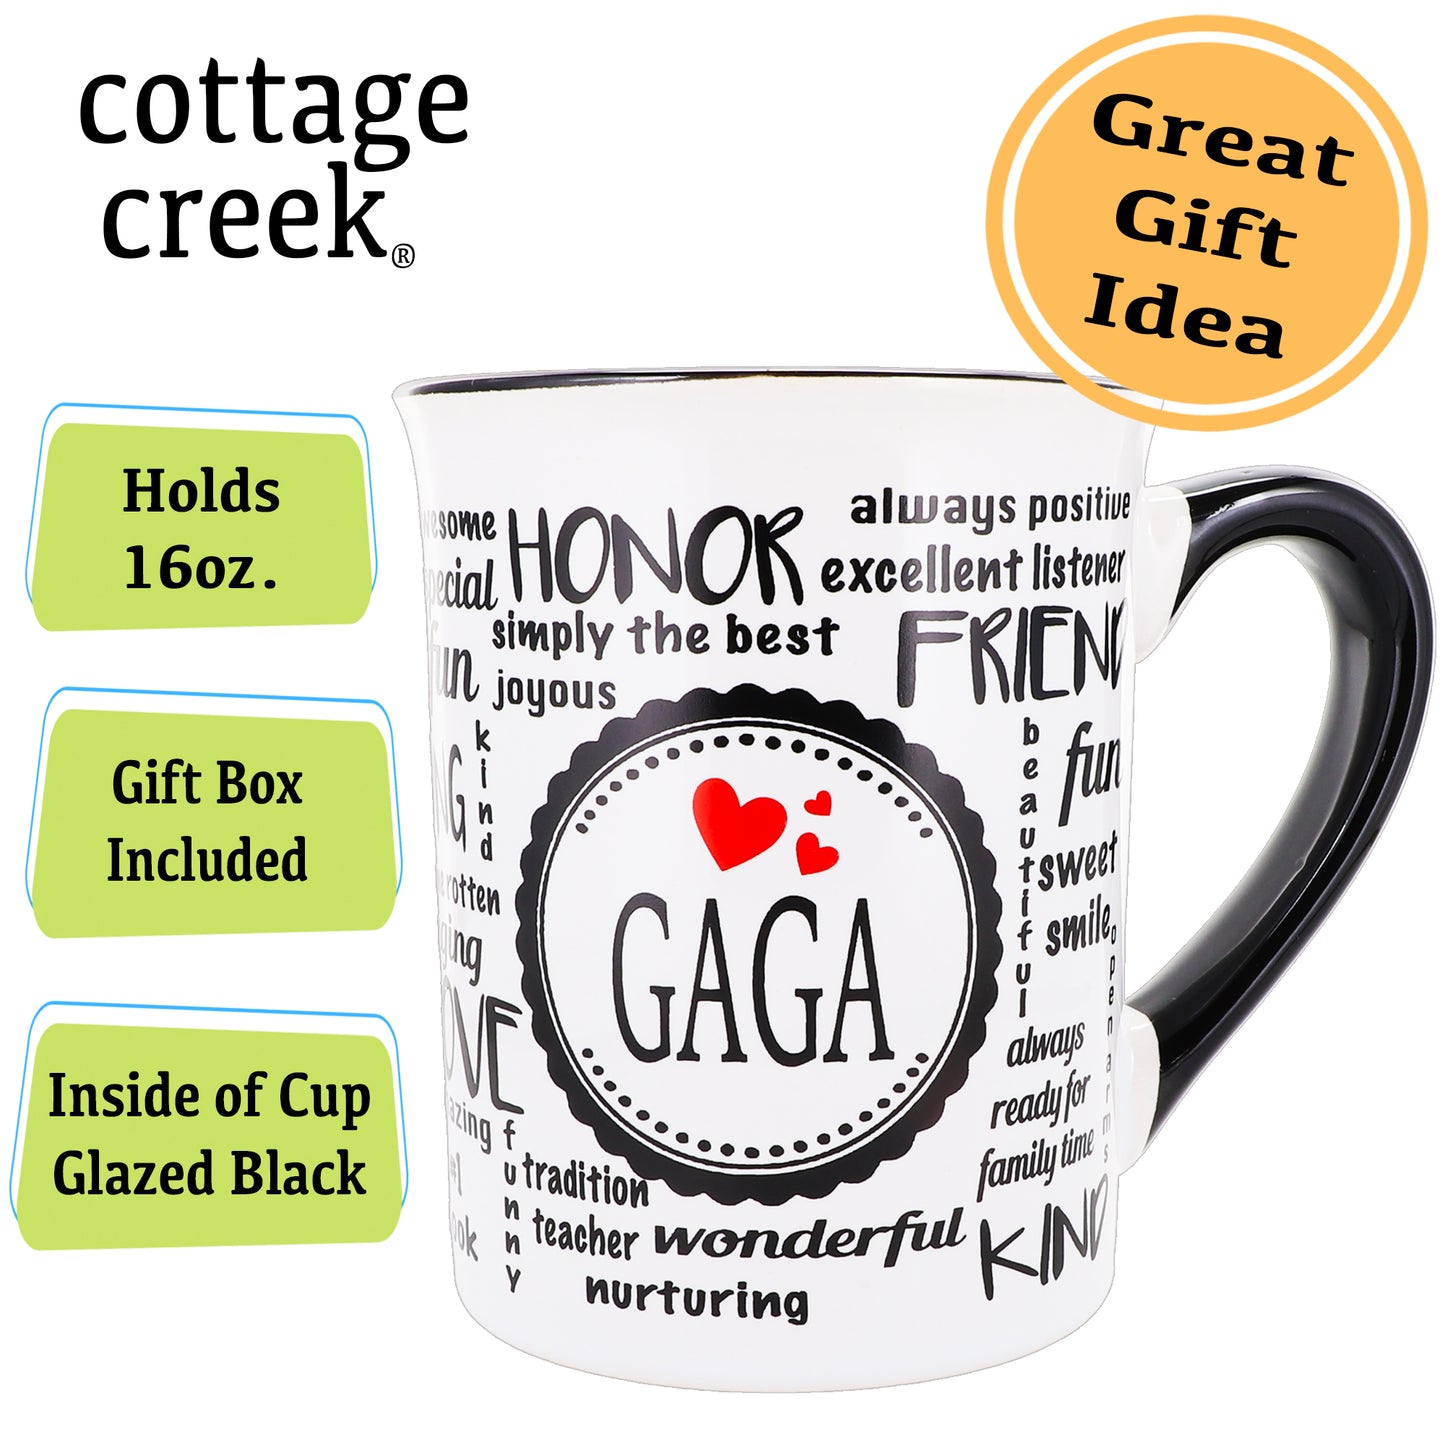 Cottage Creek Gaga Mug, Gaga Coffee Mug for Gaga, 16oz., 6" Multicolored